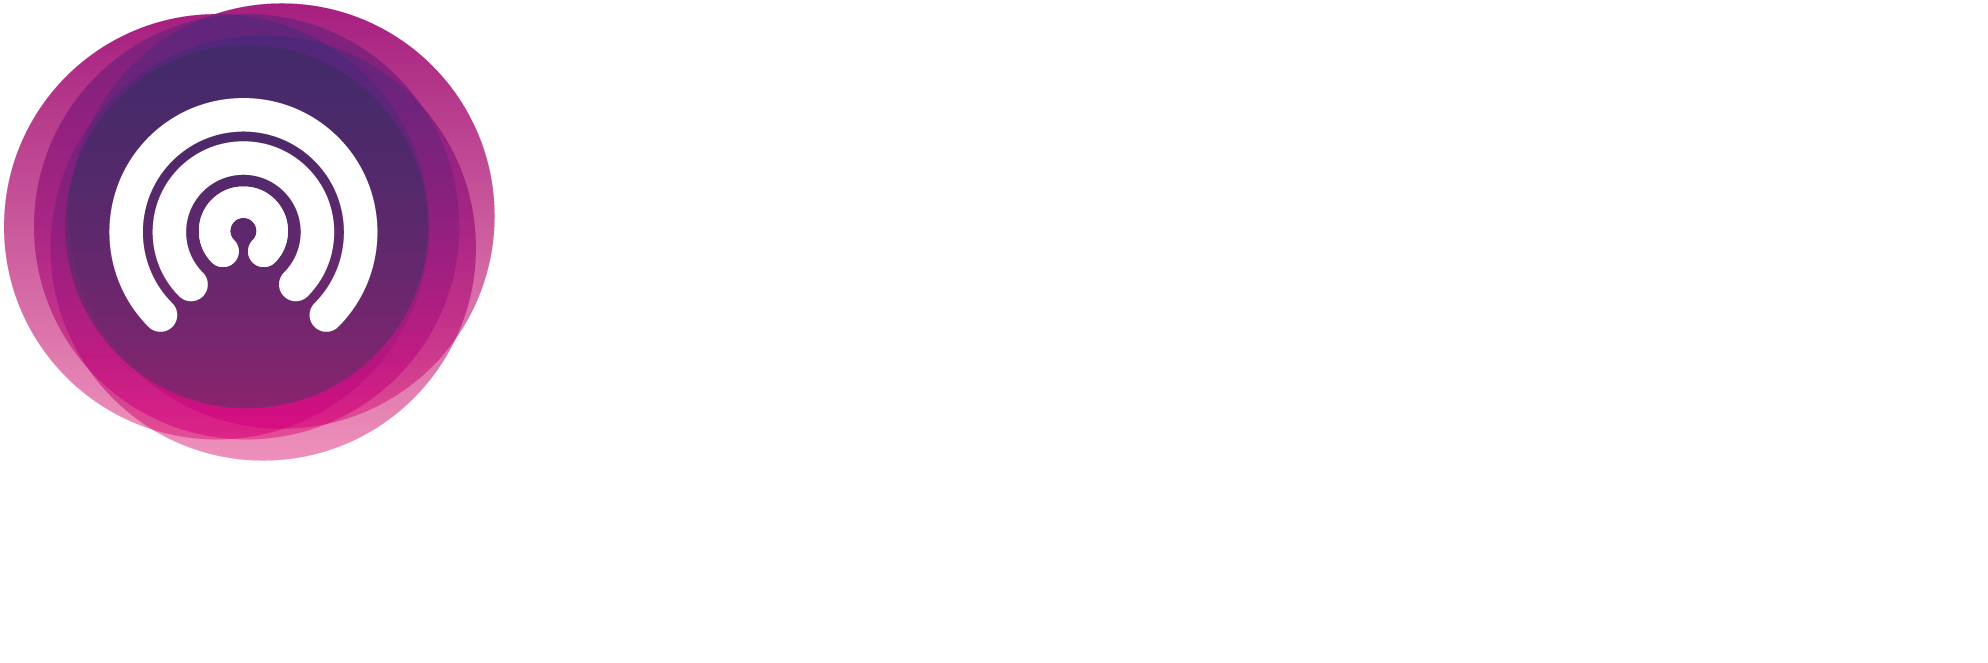 Digital Healthcare Show 2024